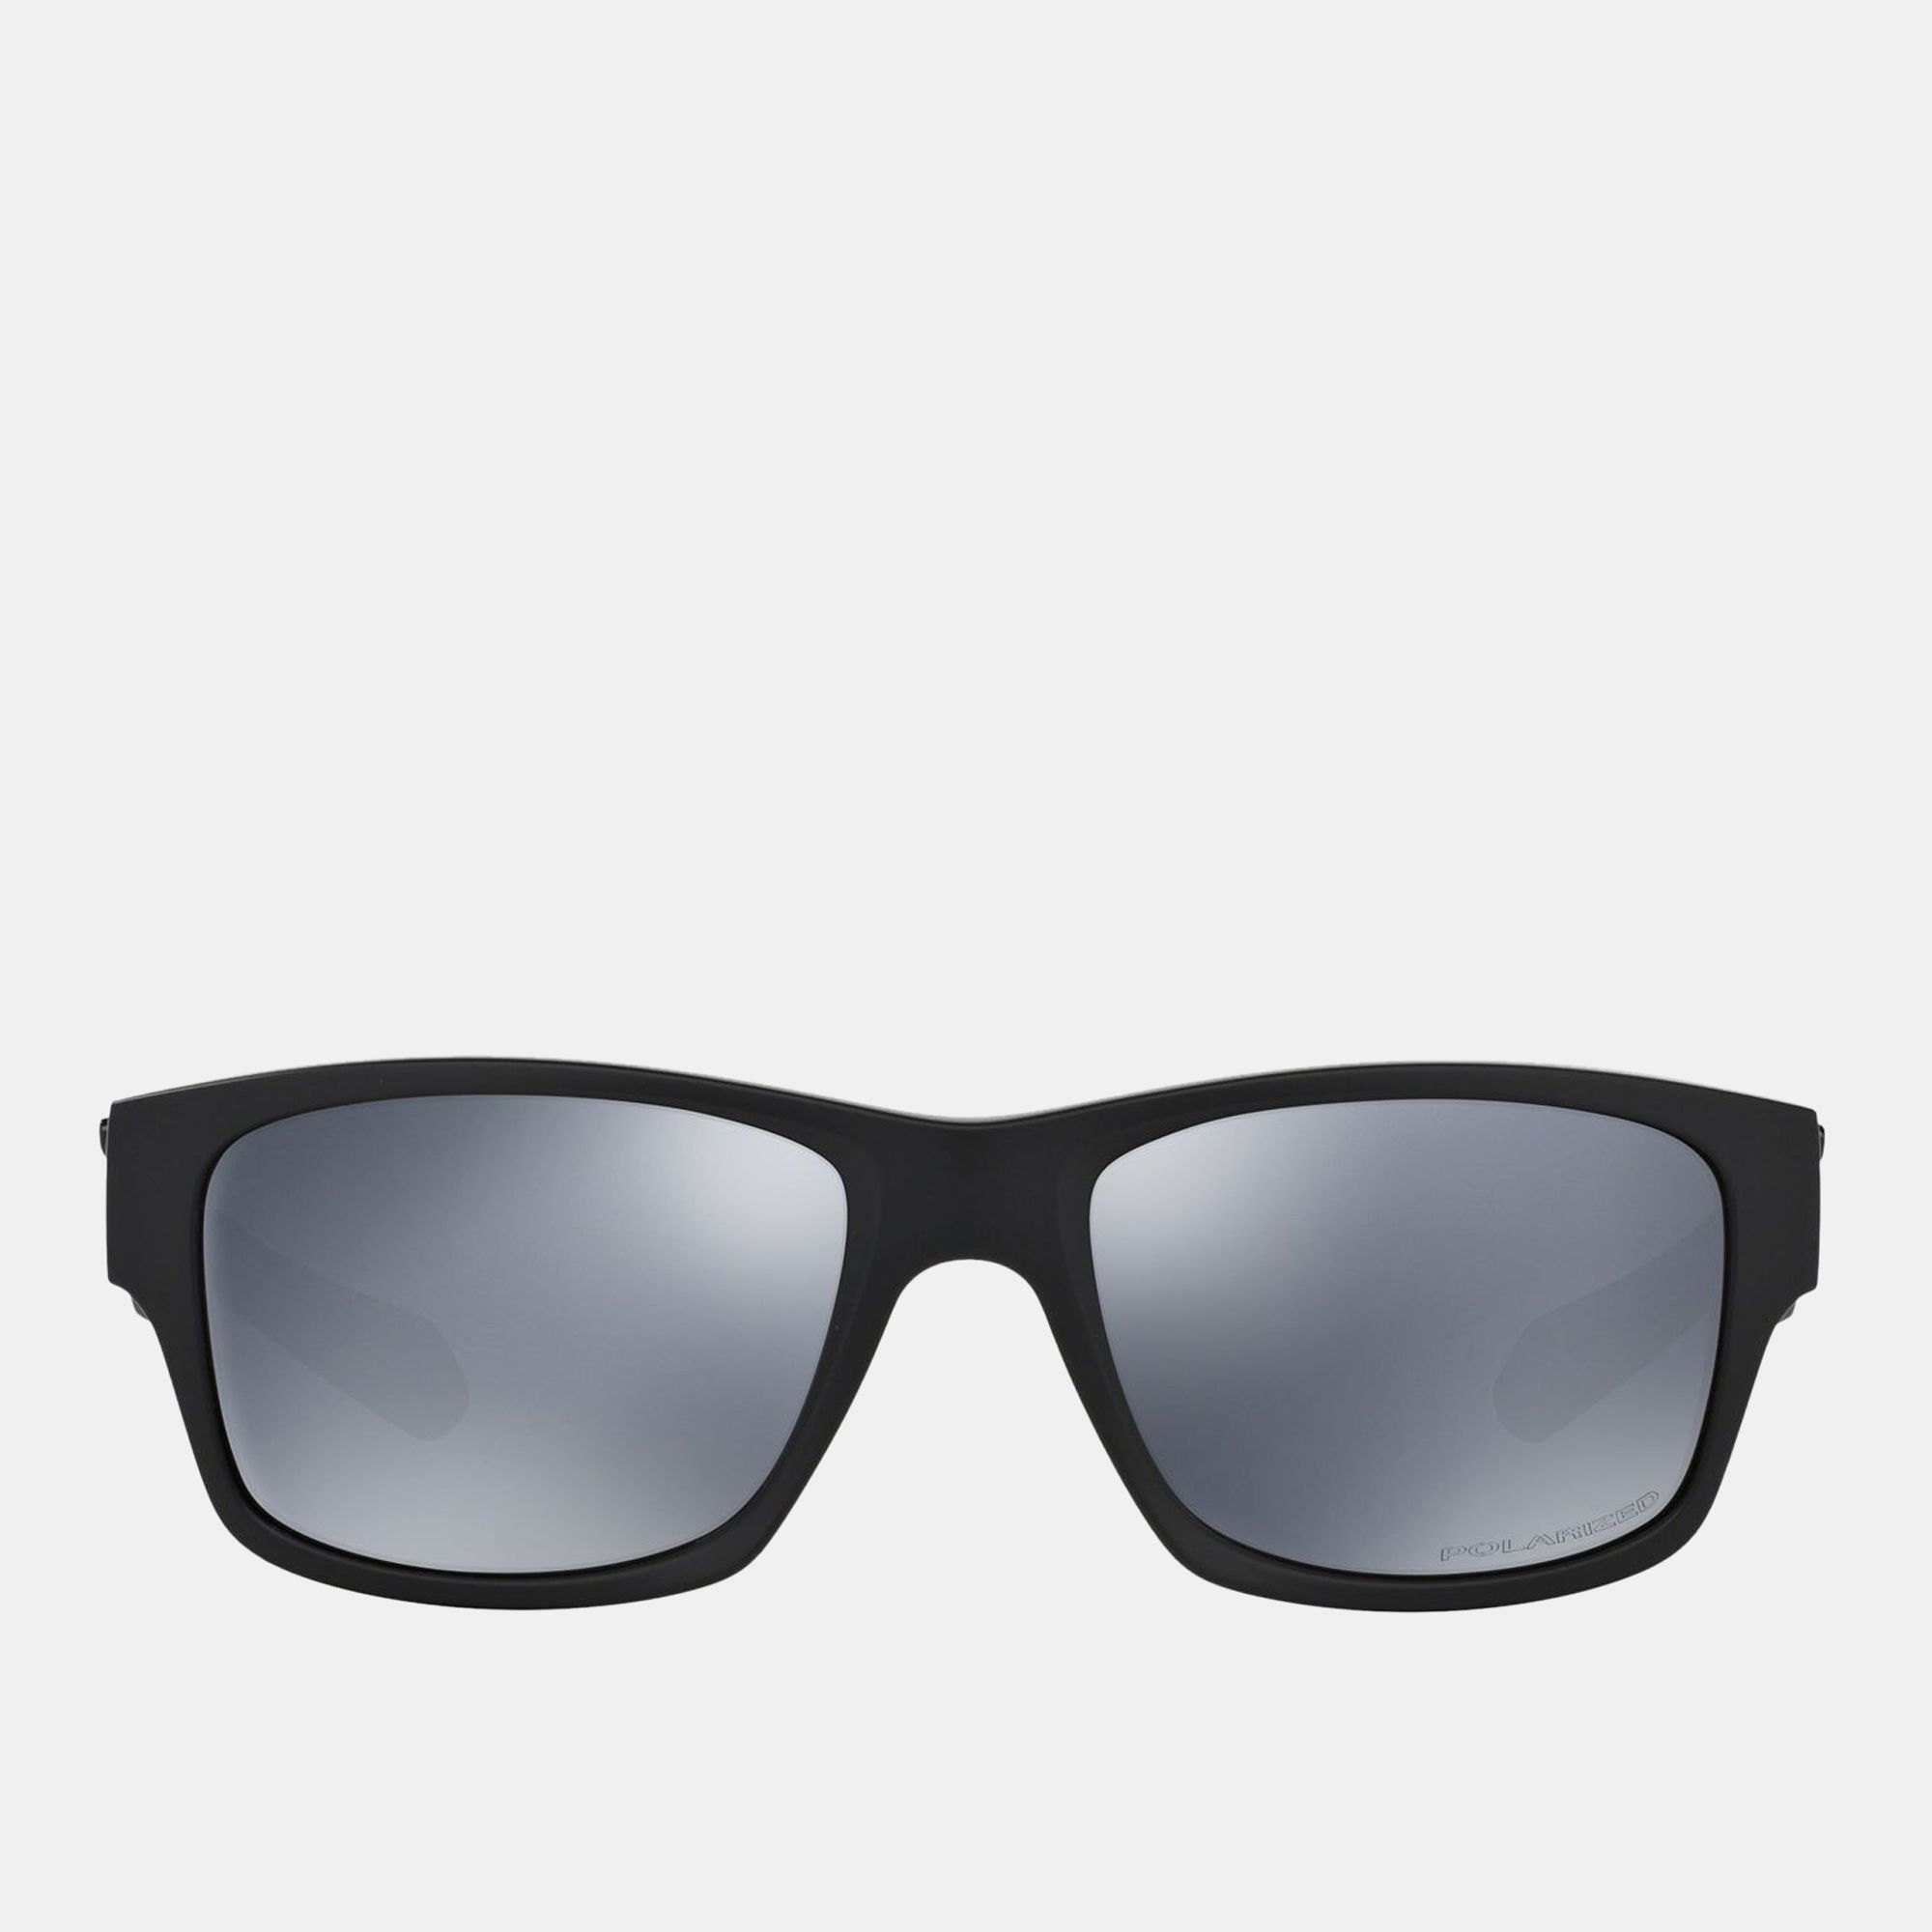 Buy Oakley Jupiter Polarized Jupiter Squared® Sunglasses Online in ...